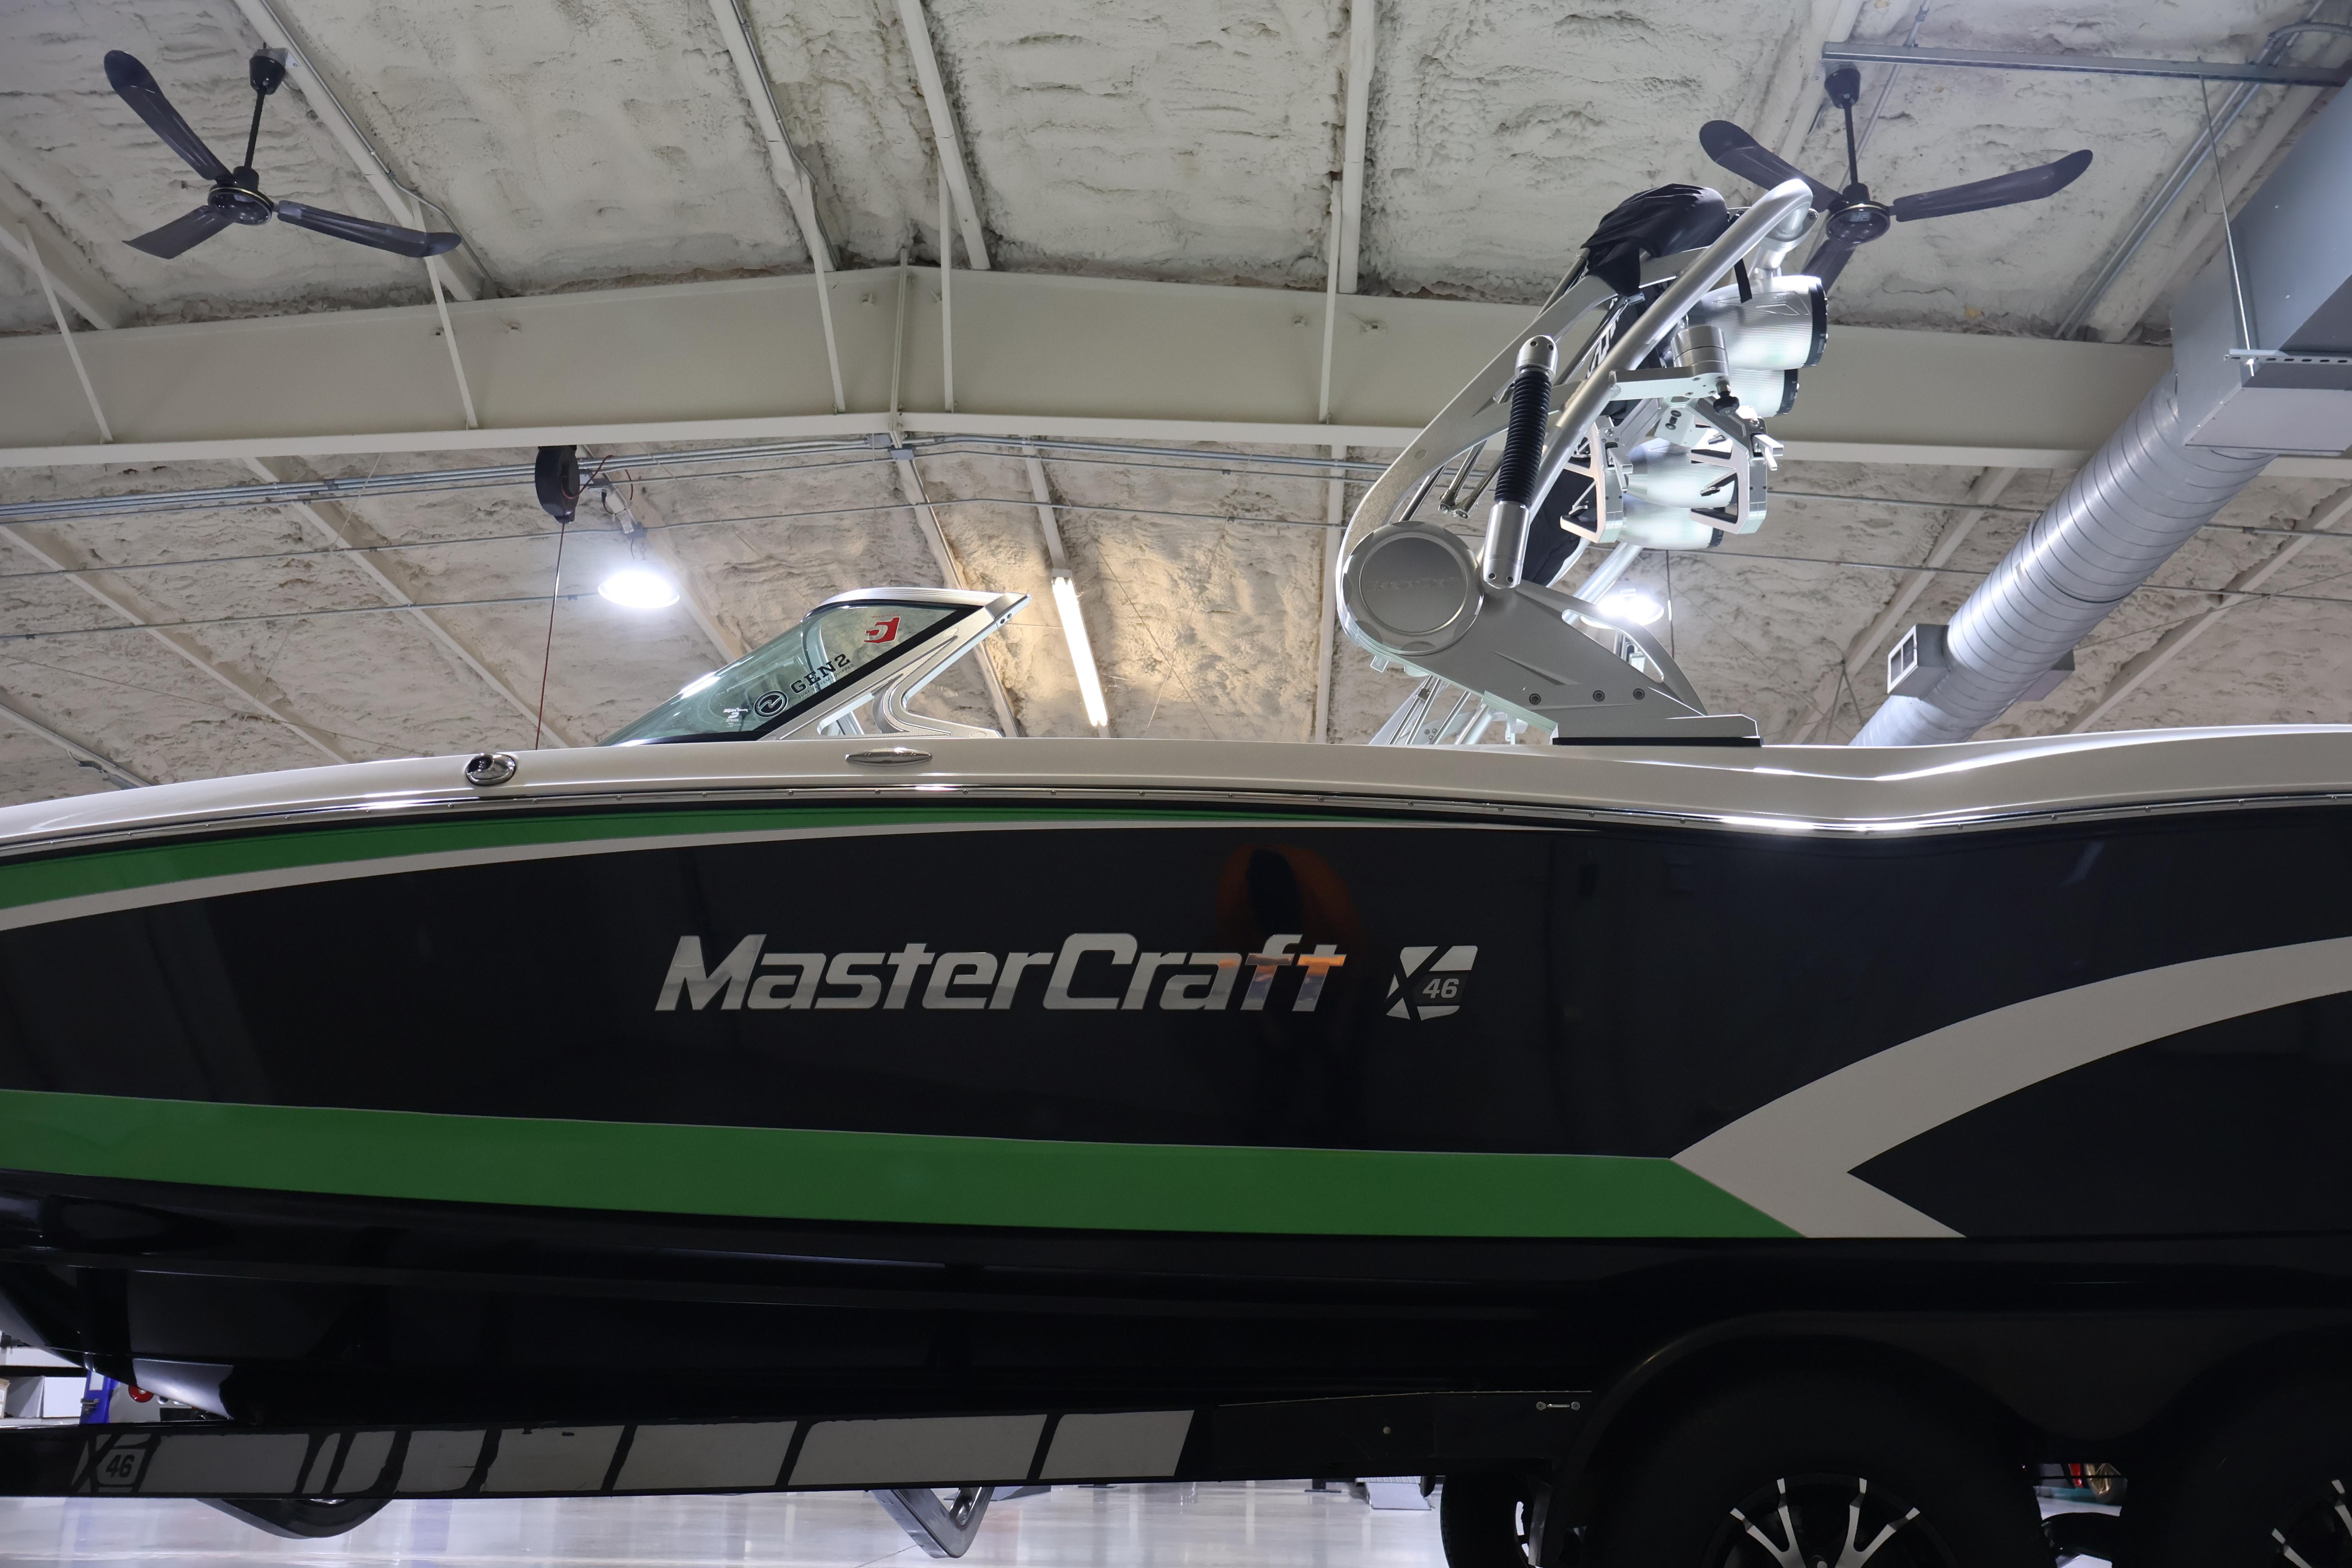 2015 MasterCraft X46